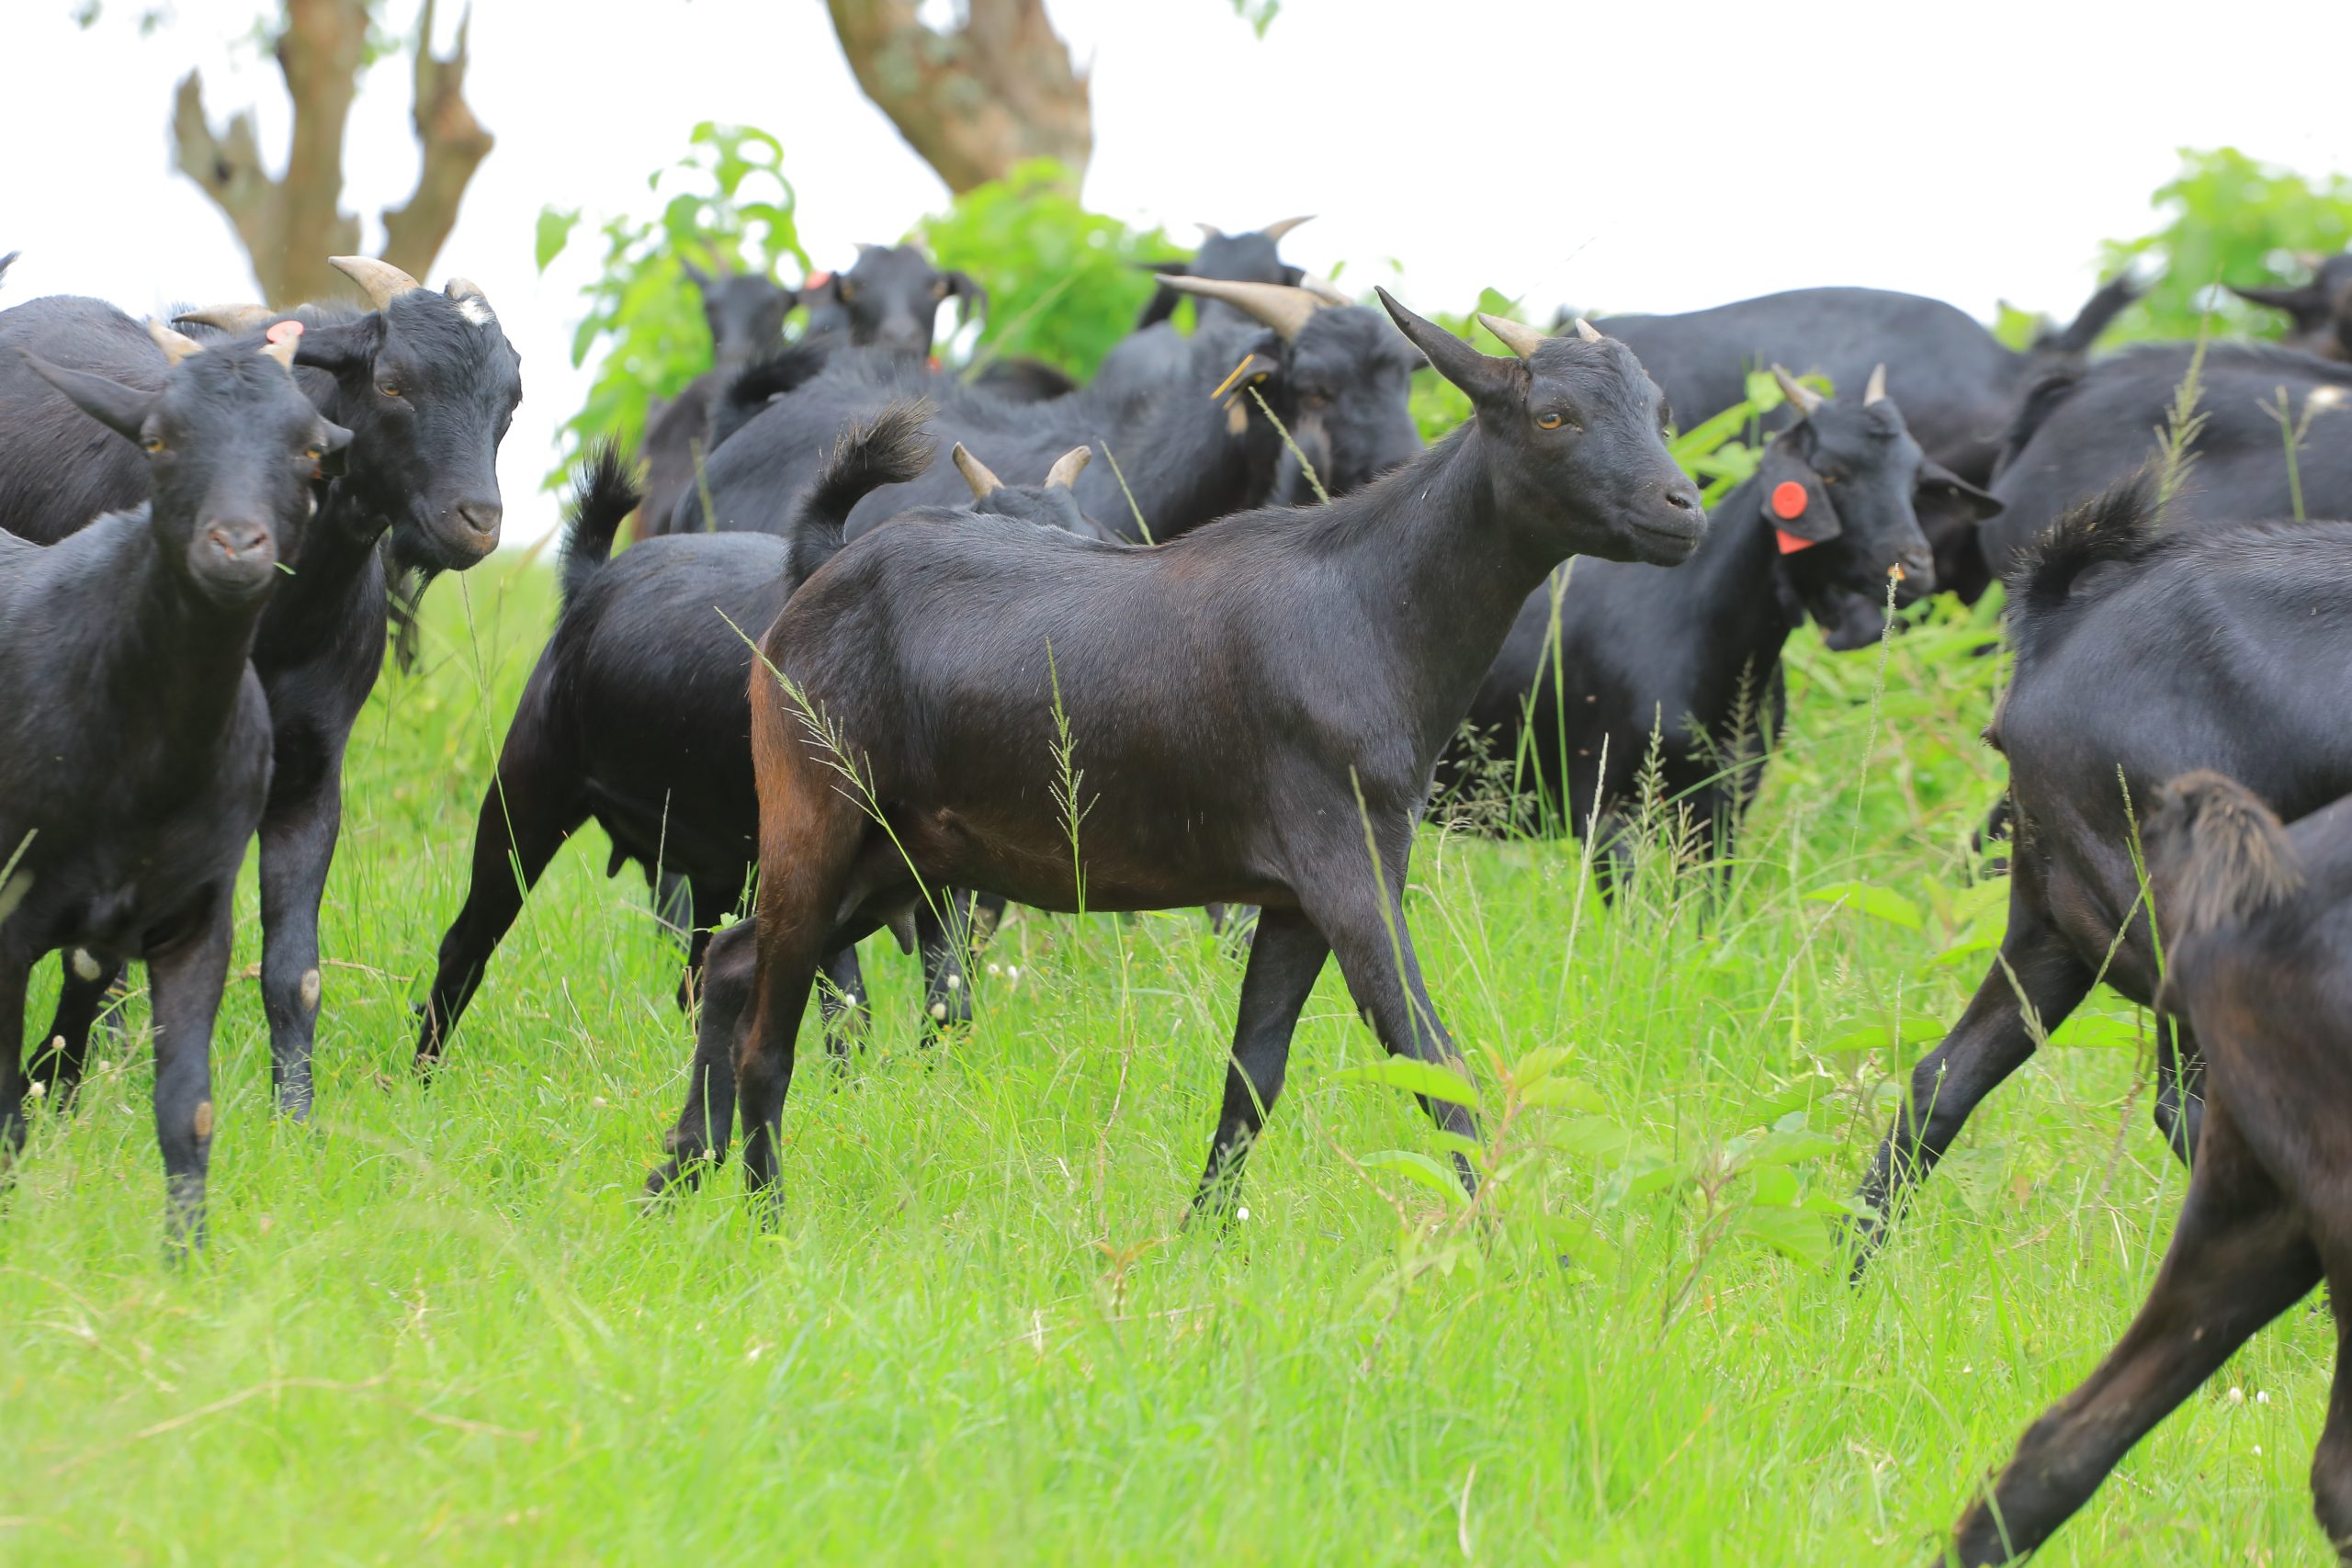 NAGRC&DB's strategic programmes stimulate livestock productivity growth.